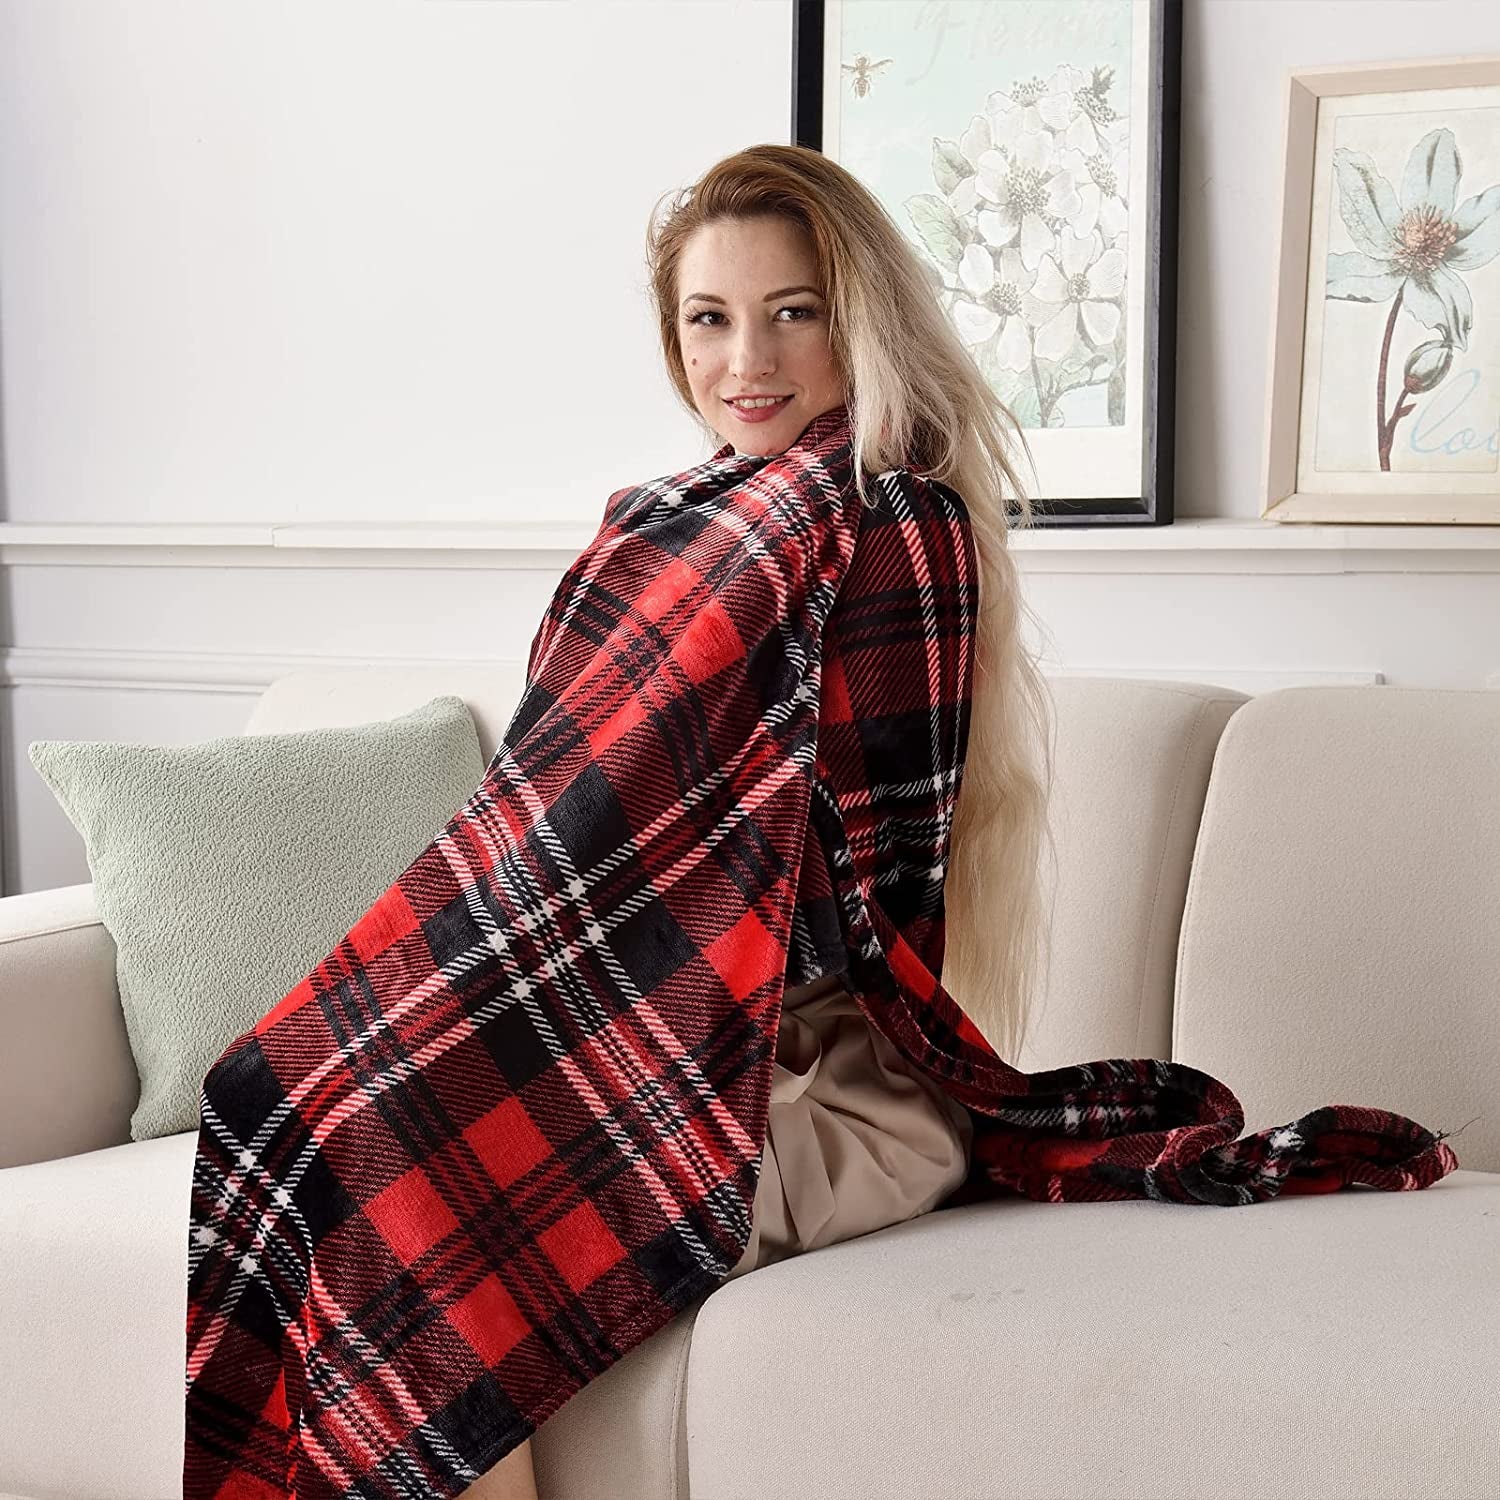 Flannel Fleece Blanket 